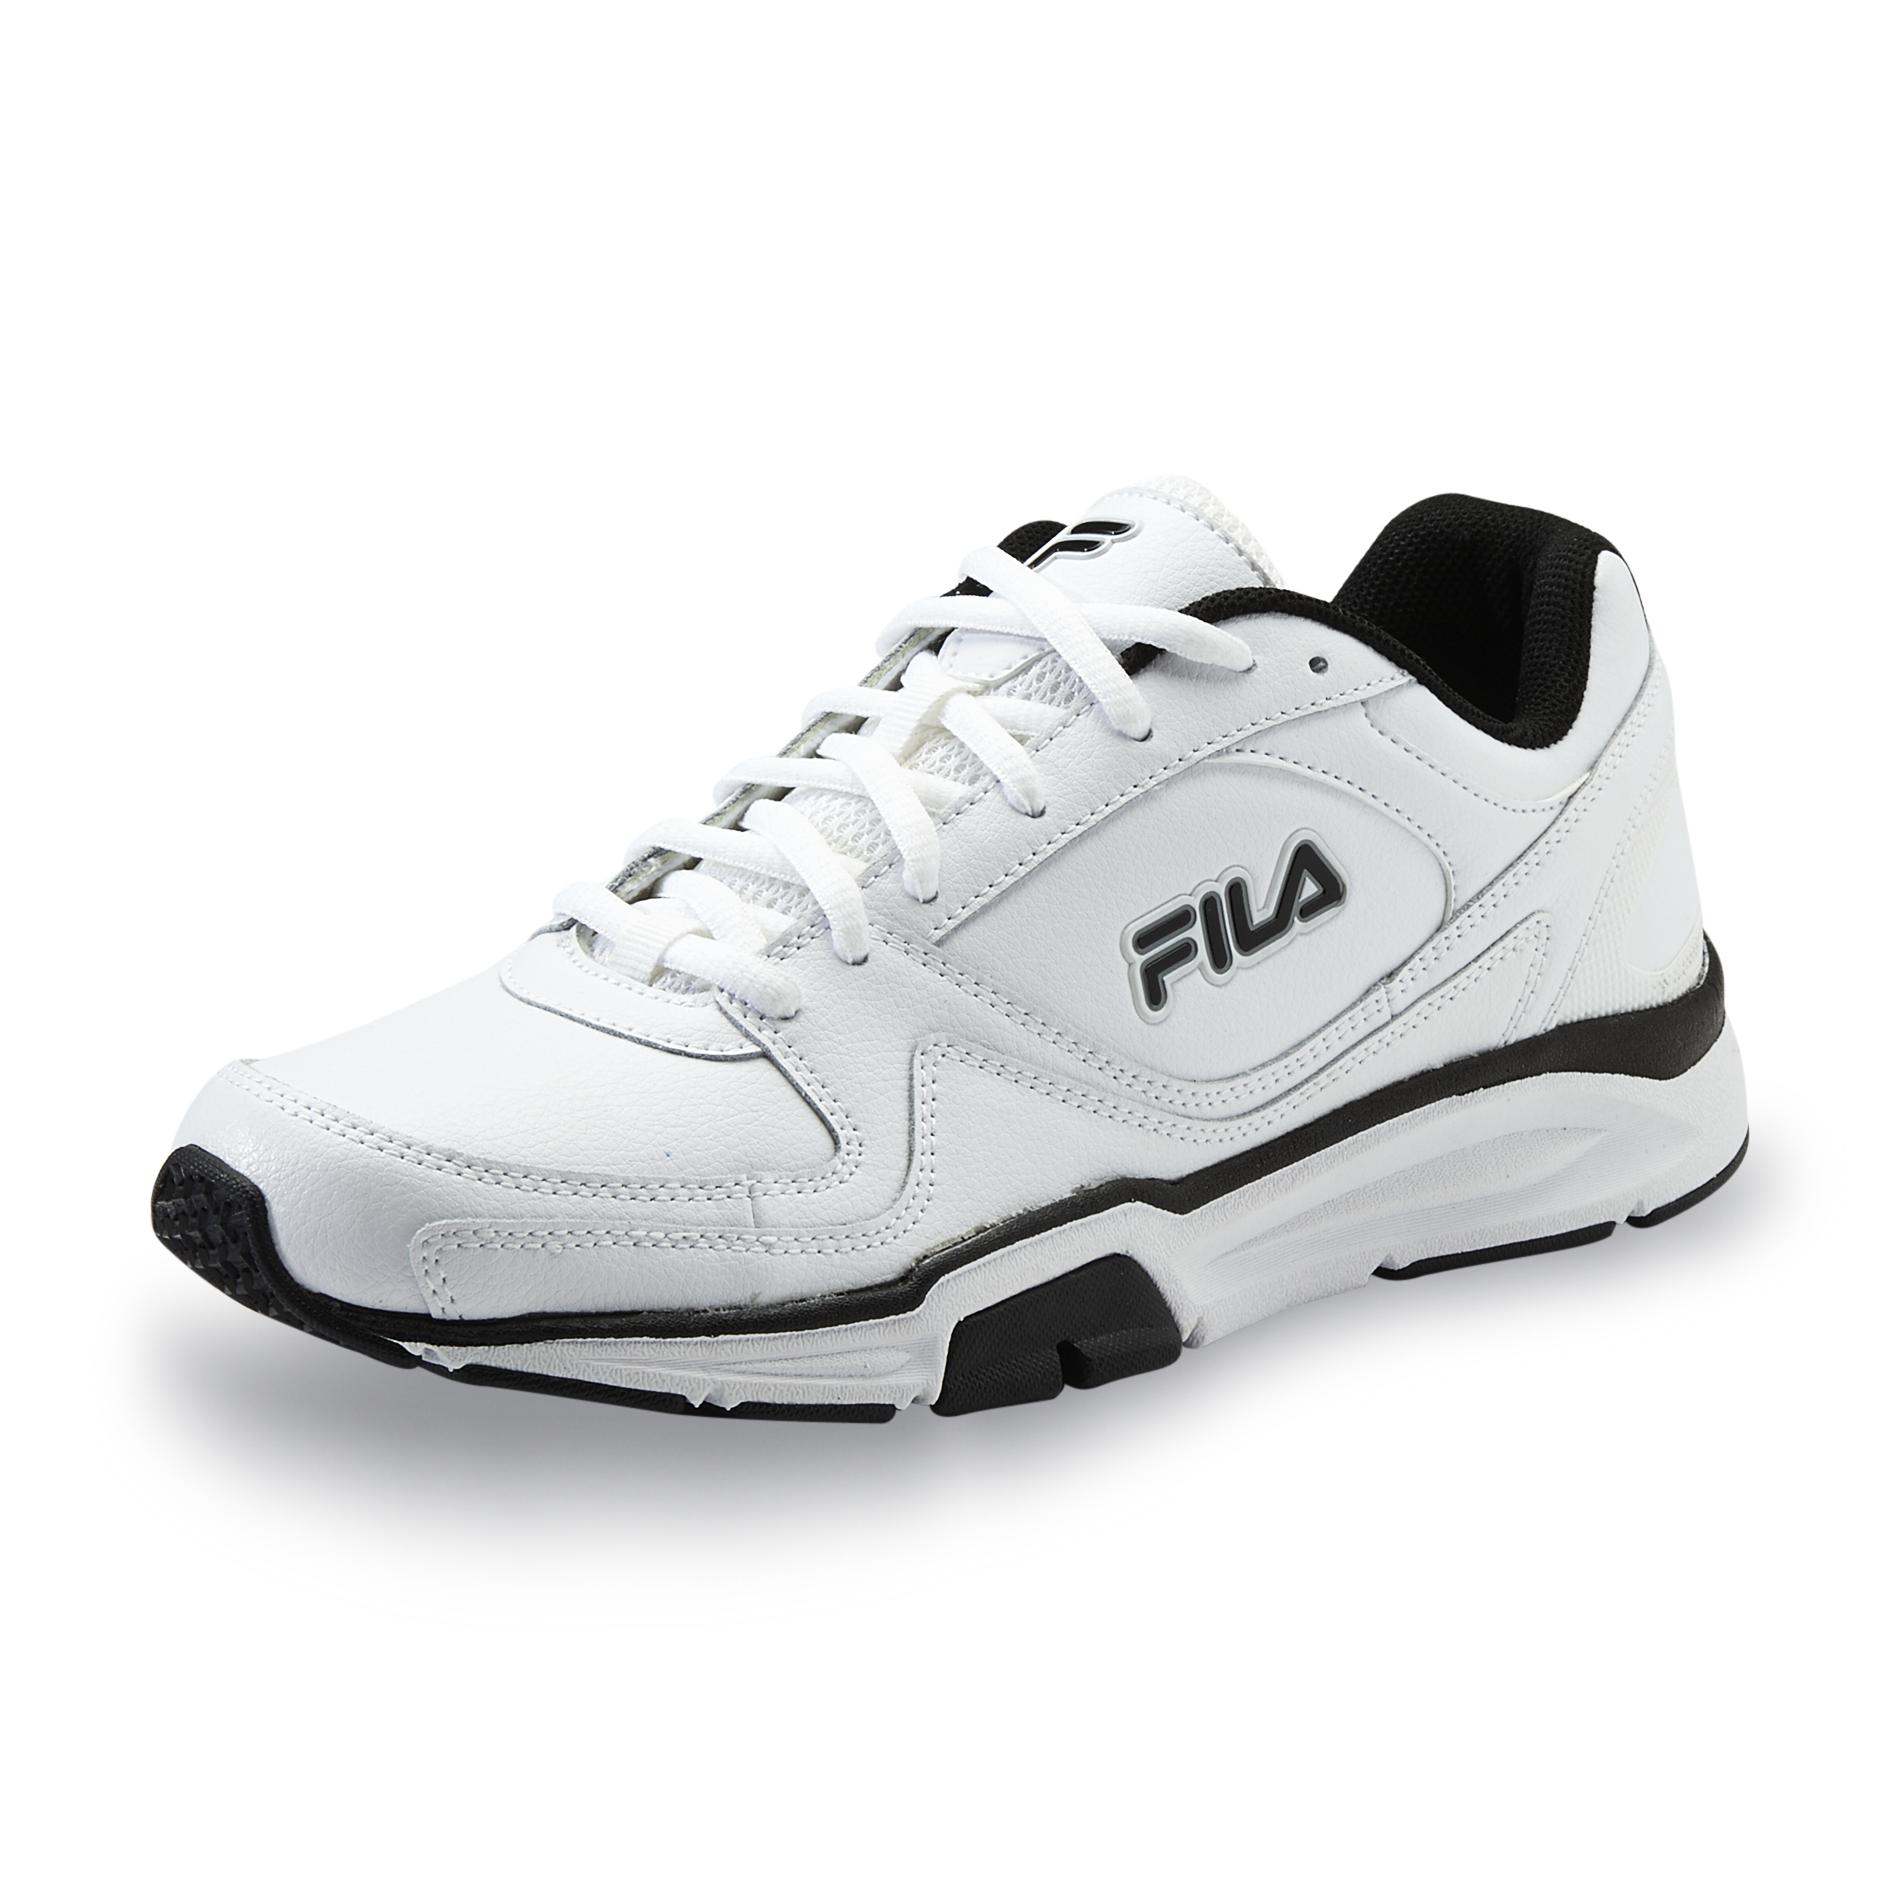 Fila Men's Vigilance Trainer Cross Training Athletic Shoe - White/Black